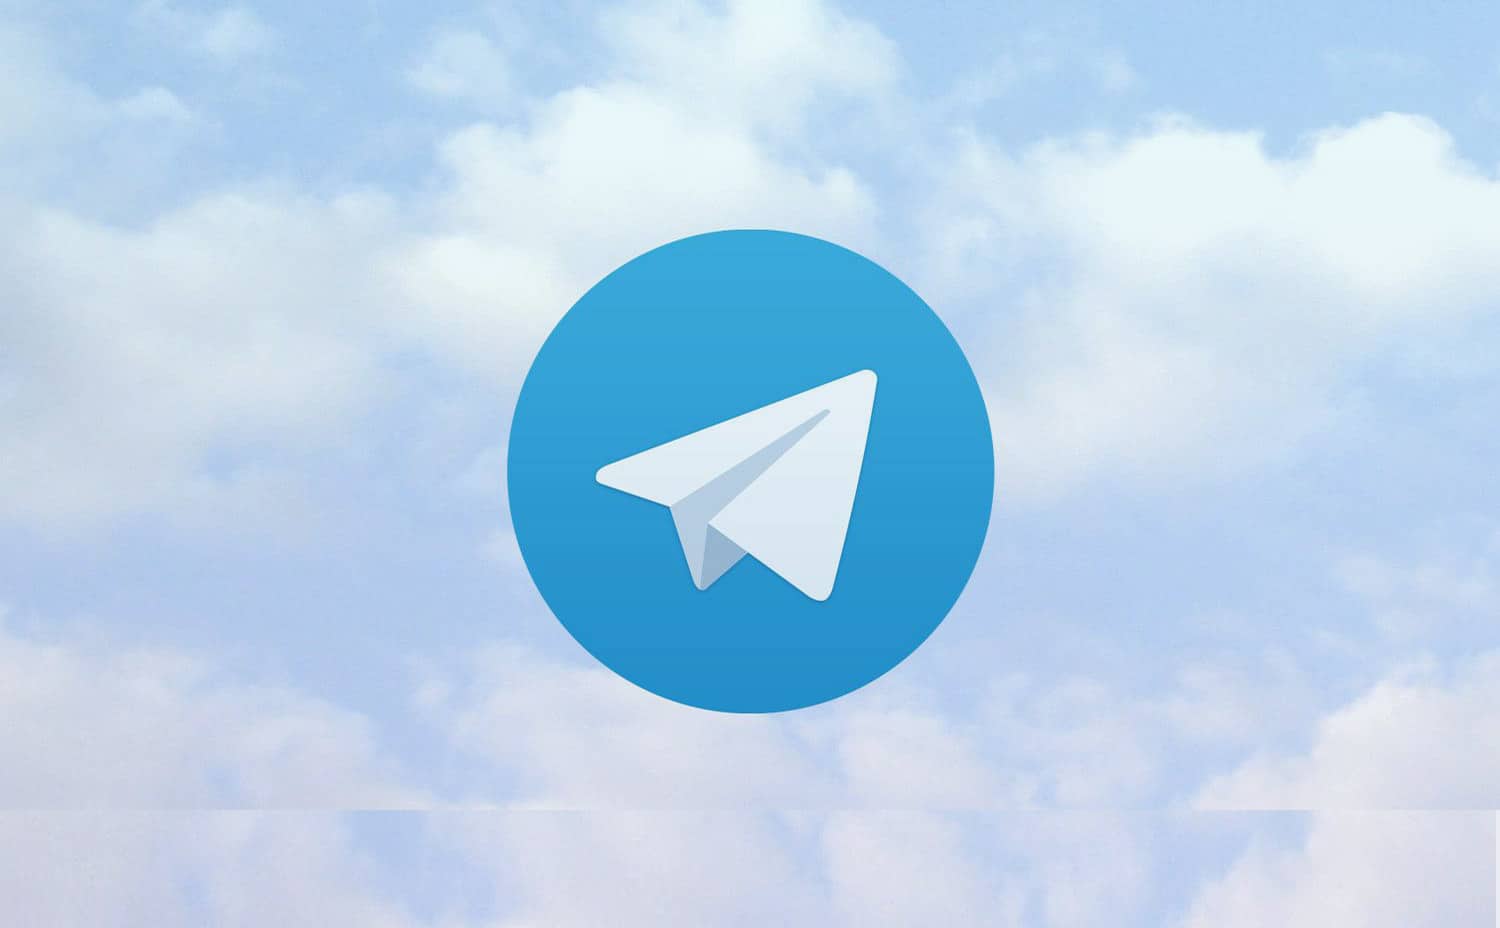 برنامج تليجرام